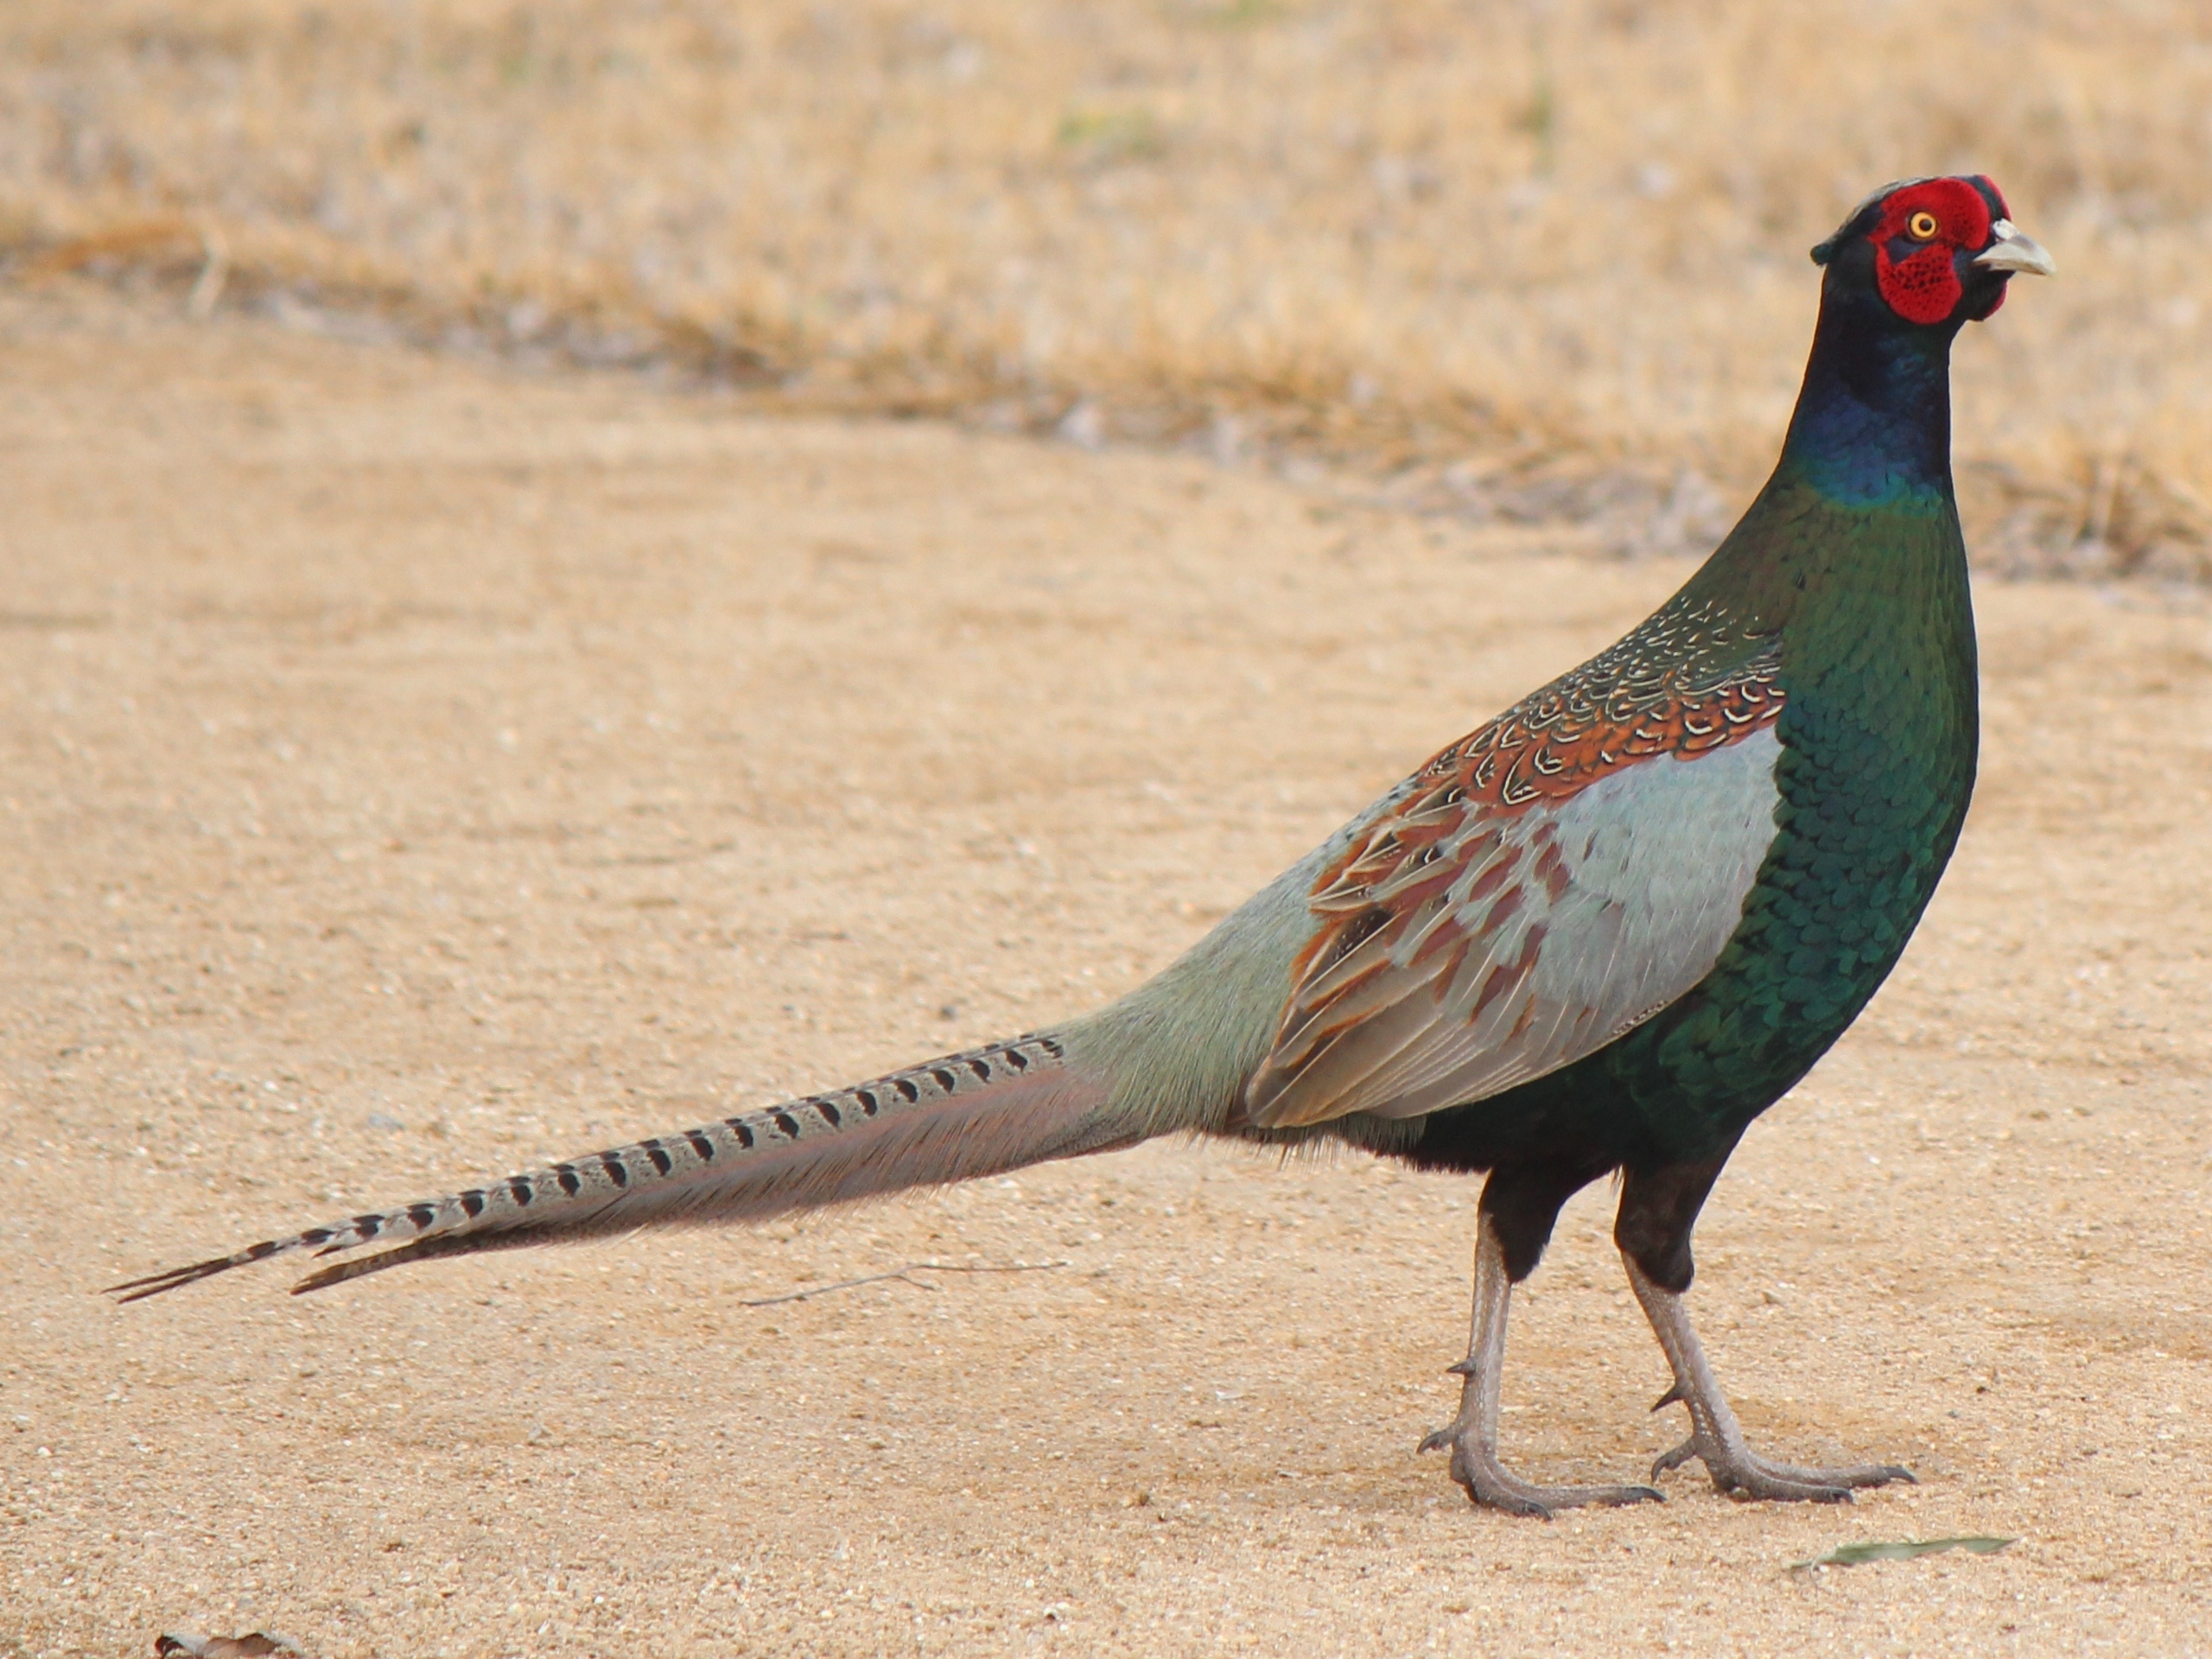 Green pheasant - Wikipedia